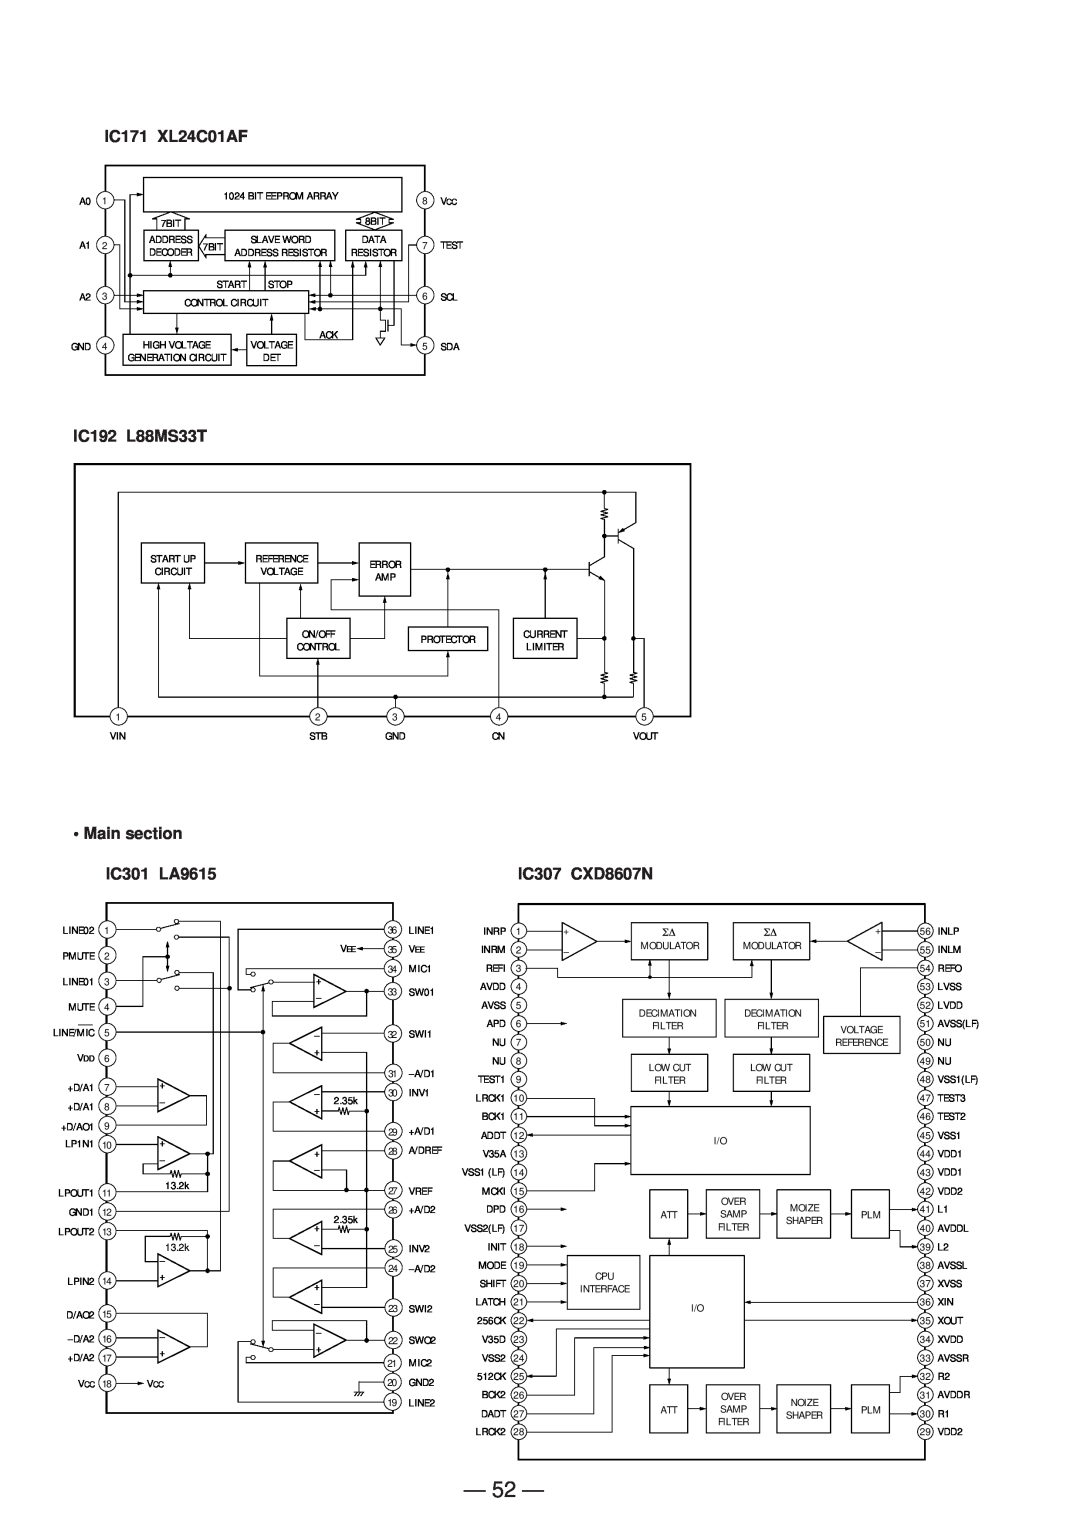 Sony MDS-JD320 service manual IC171 XL24C01AF, IC192 L88MS33T, Main section, IC301 LA9615, IC307 CXD8607N 